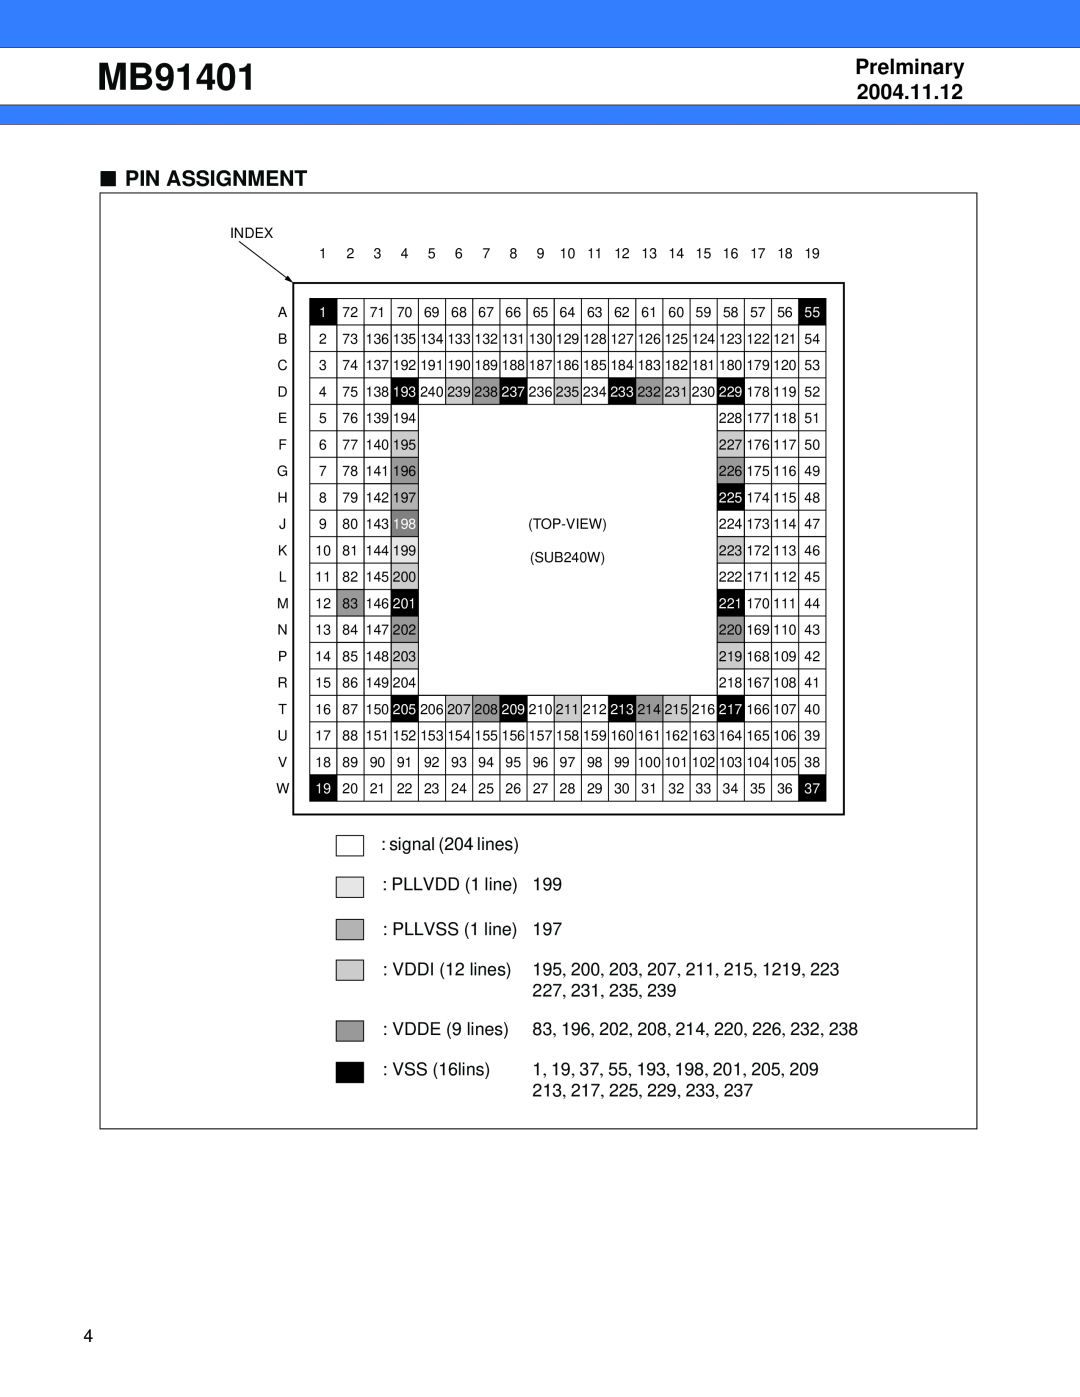 Fujitsu MB91401 manual Pin Assignment, Prelminary, 2004.11.12 